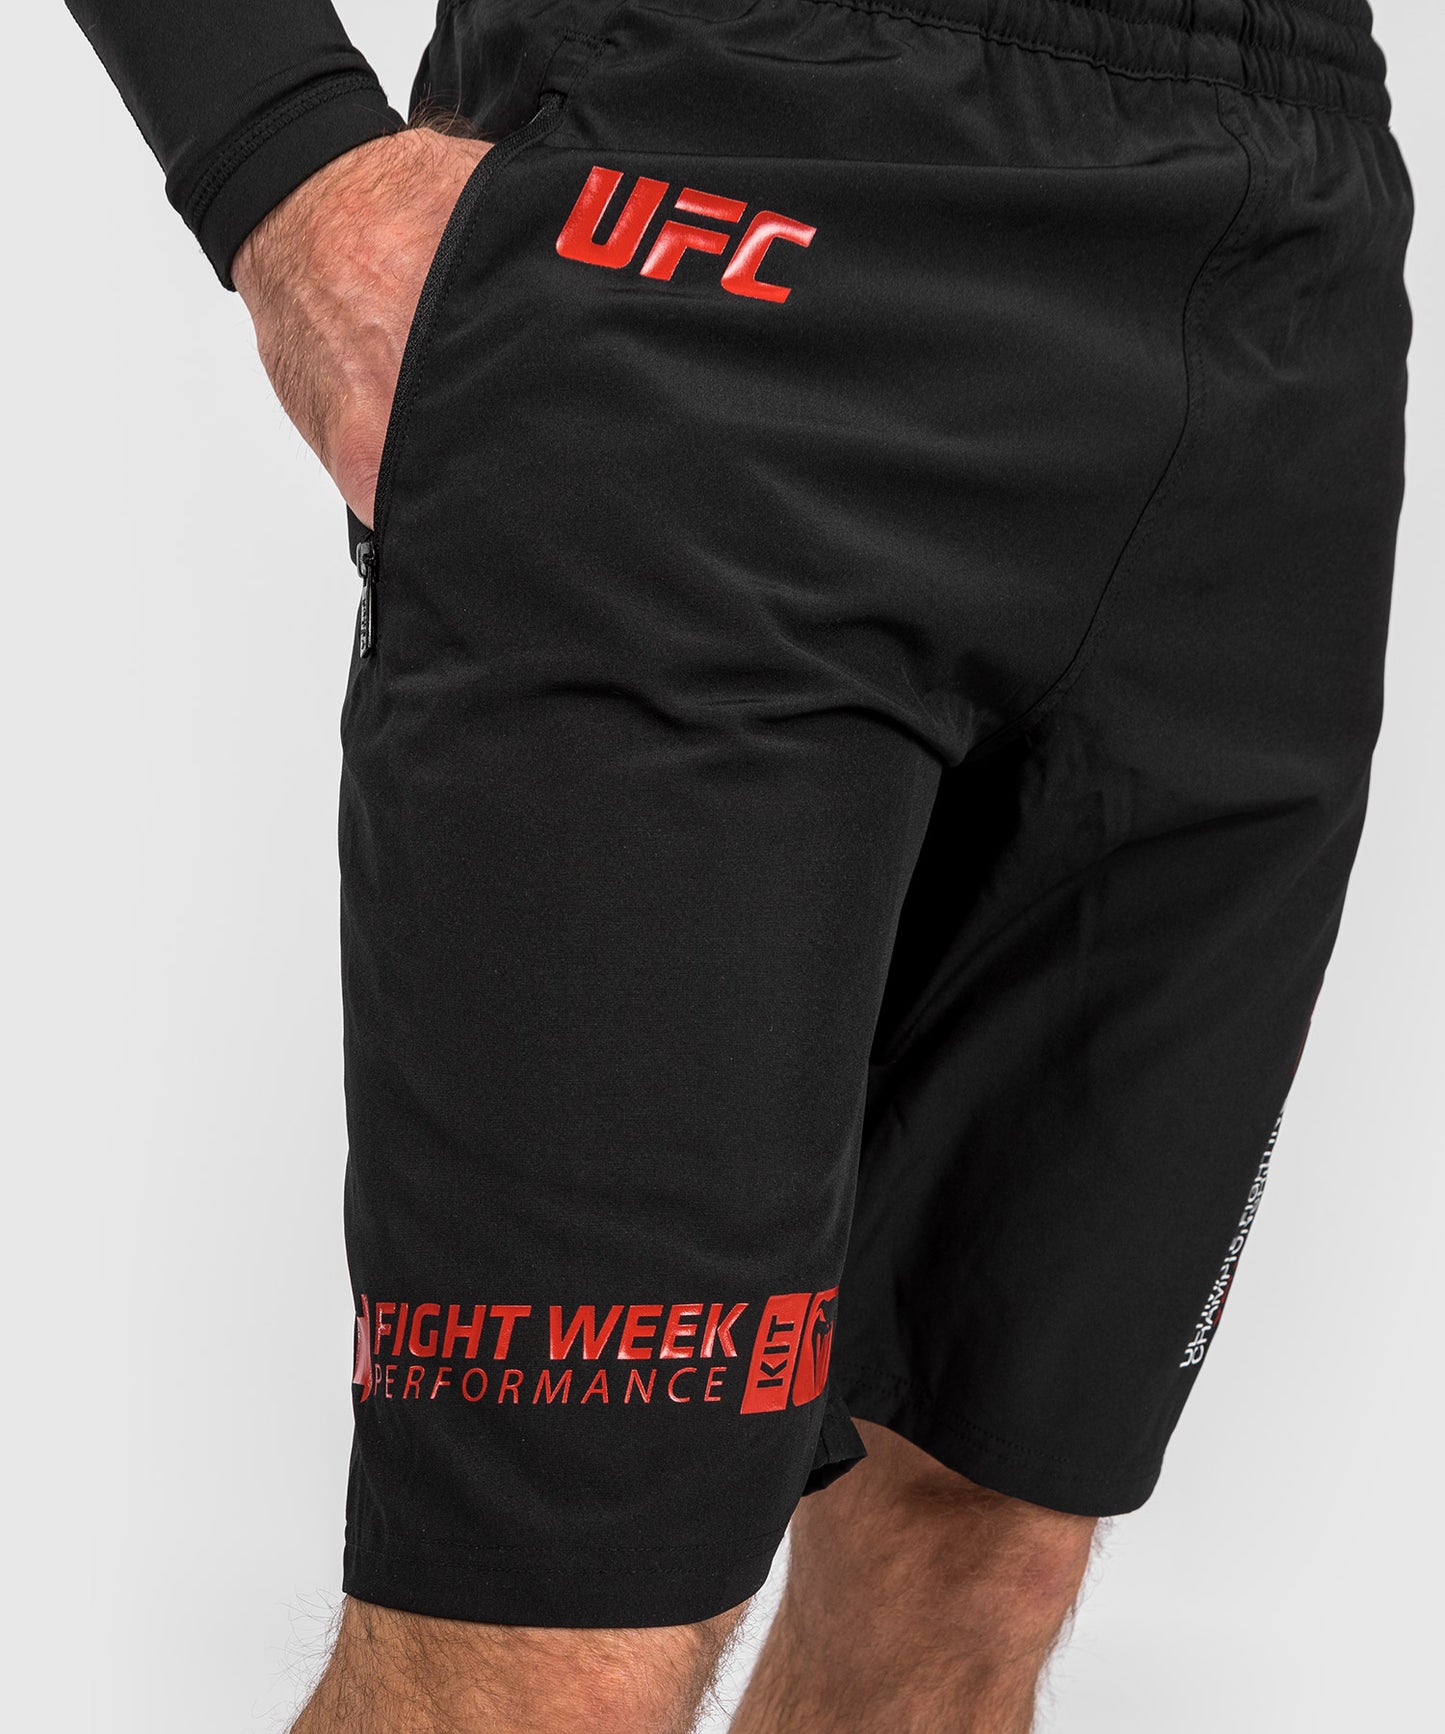 UFC Adrenaline by Venum Fight Week Men’s Performance Shorts - Black